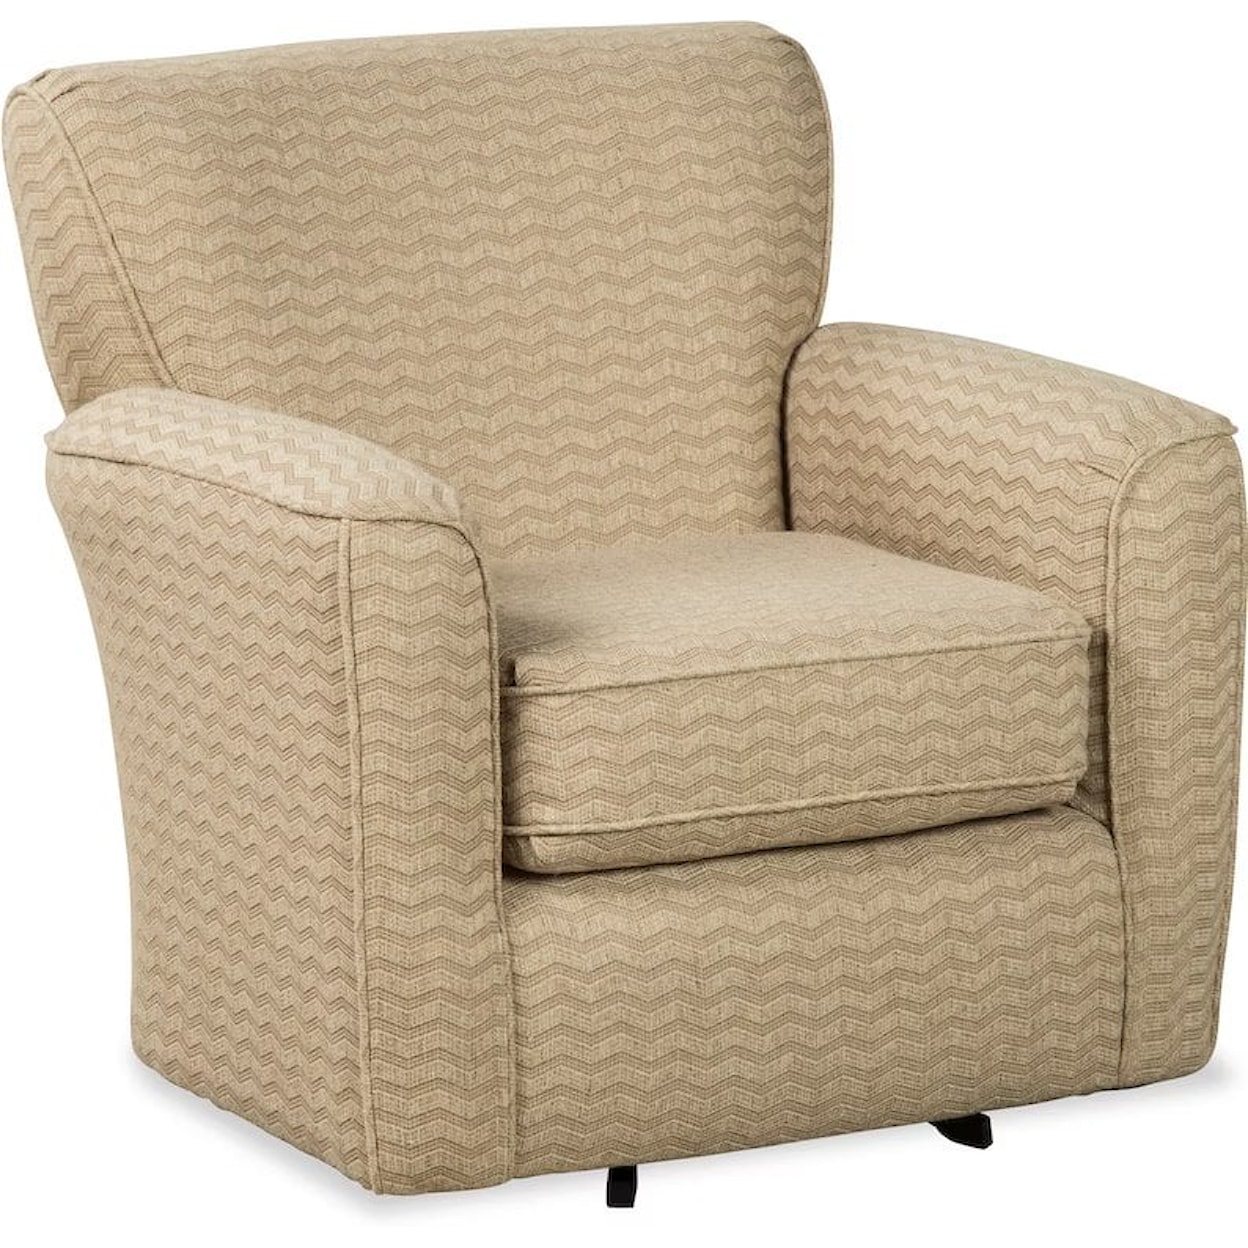 Craftmaster 068710 Upholstered Swivel Chair